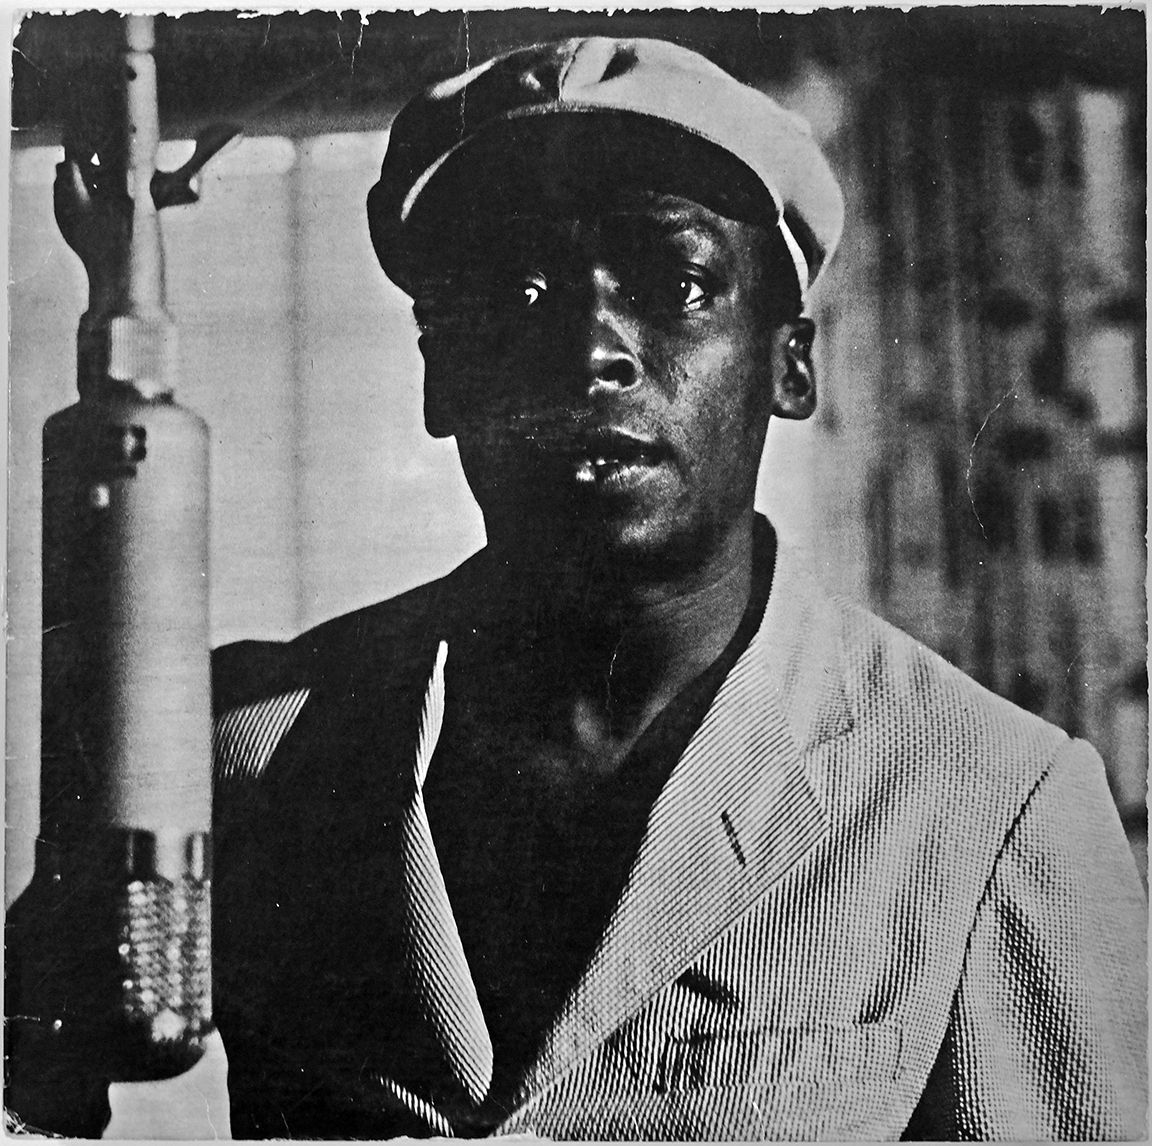 The Musings of Miles Album sleeve, New York, 1955.